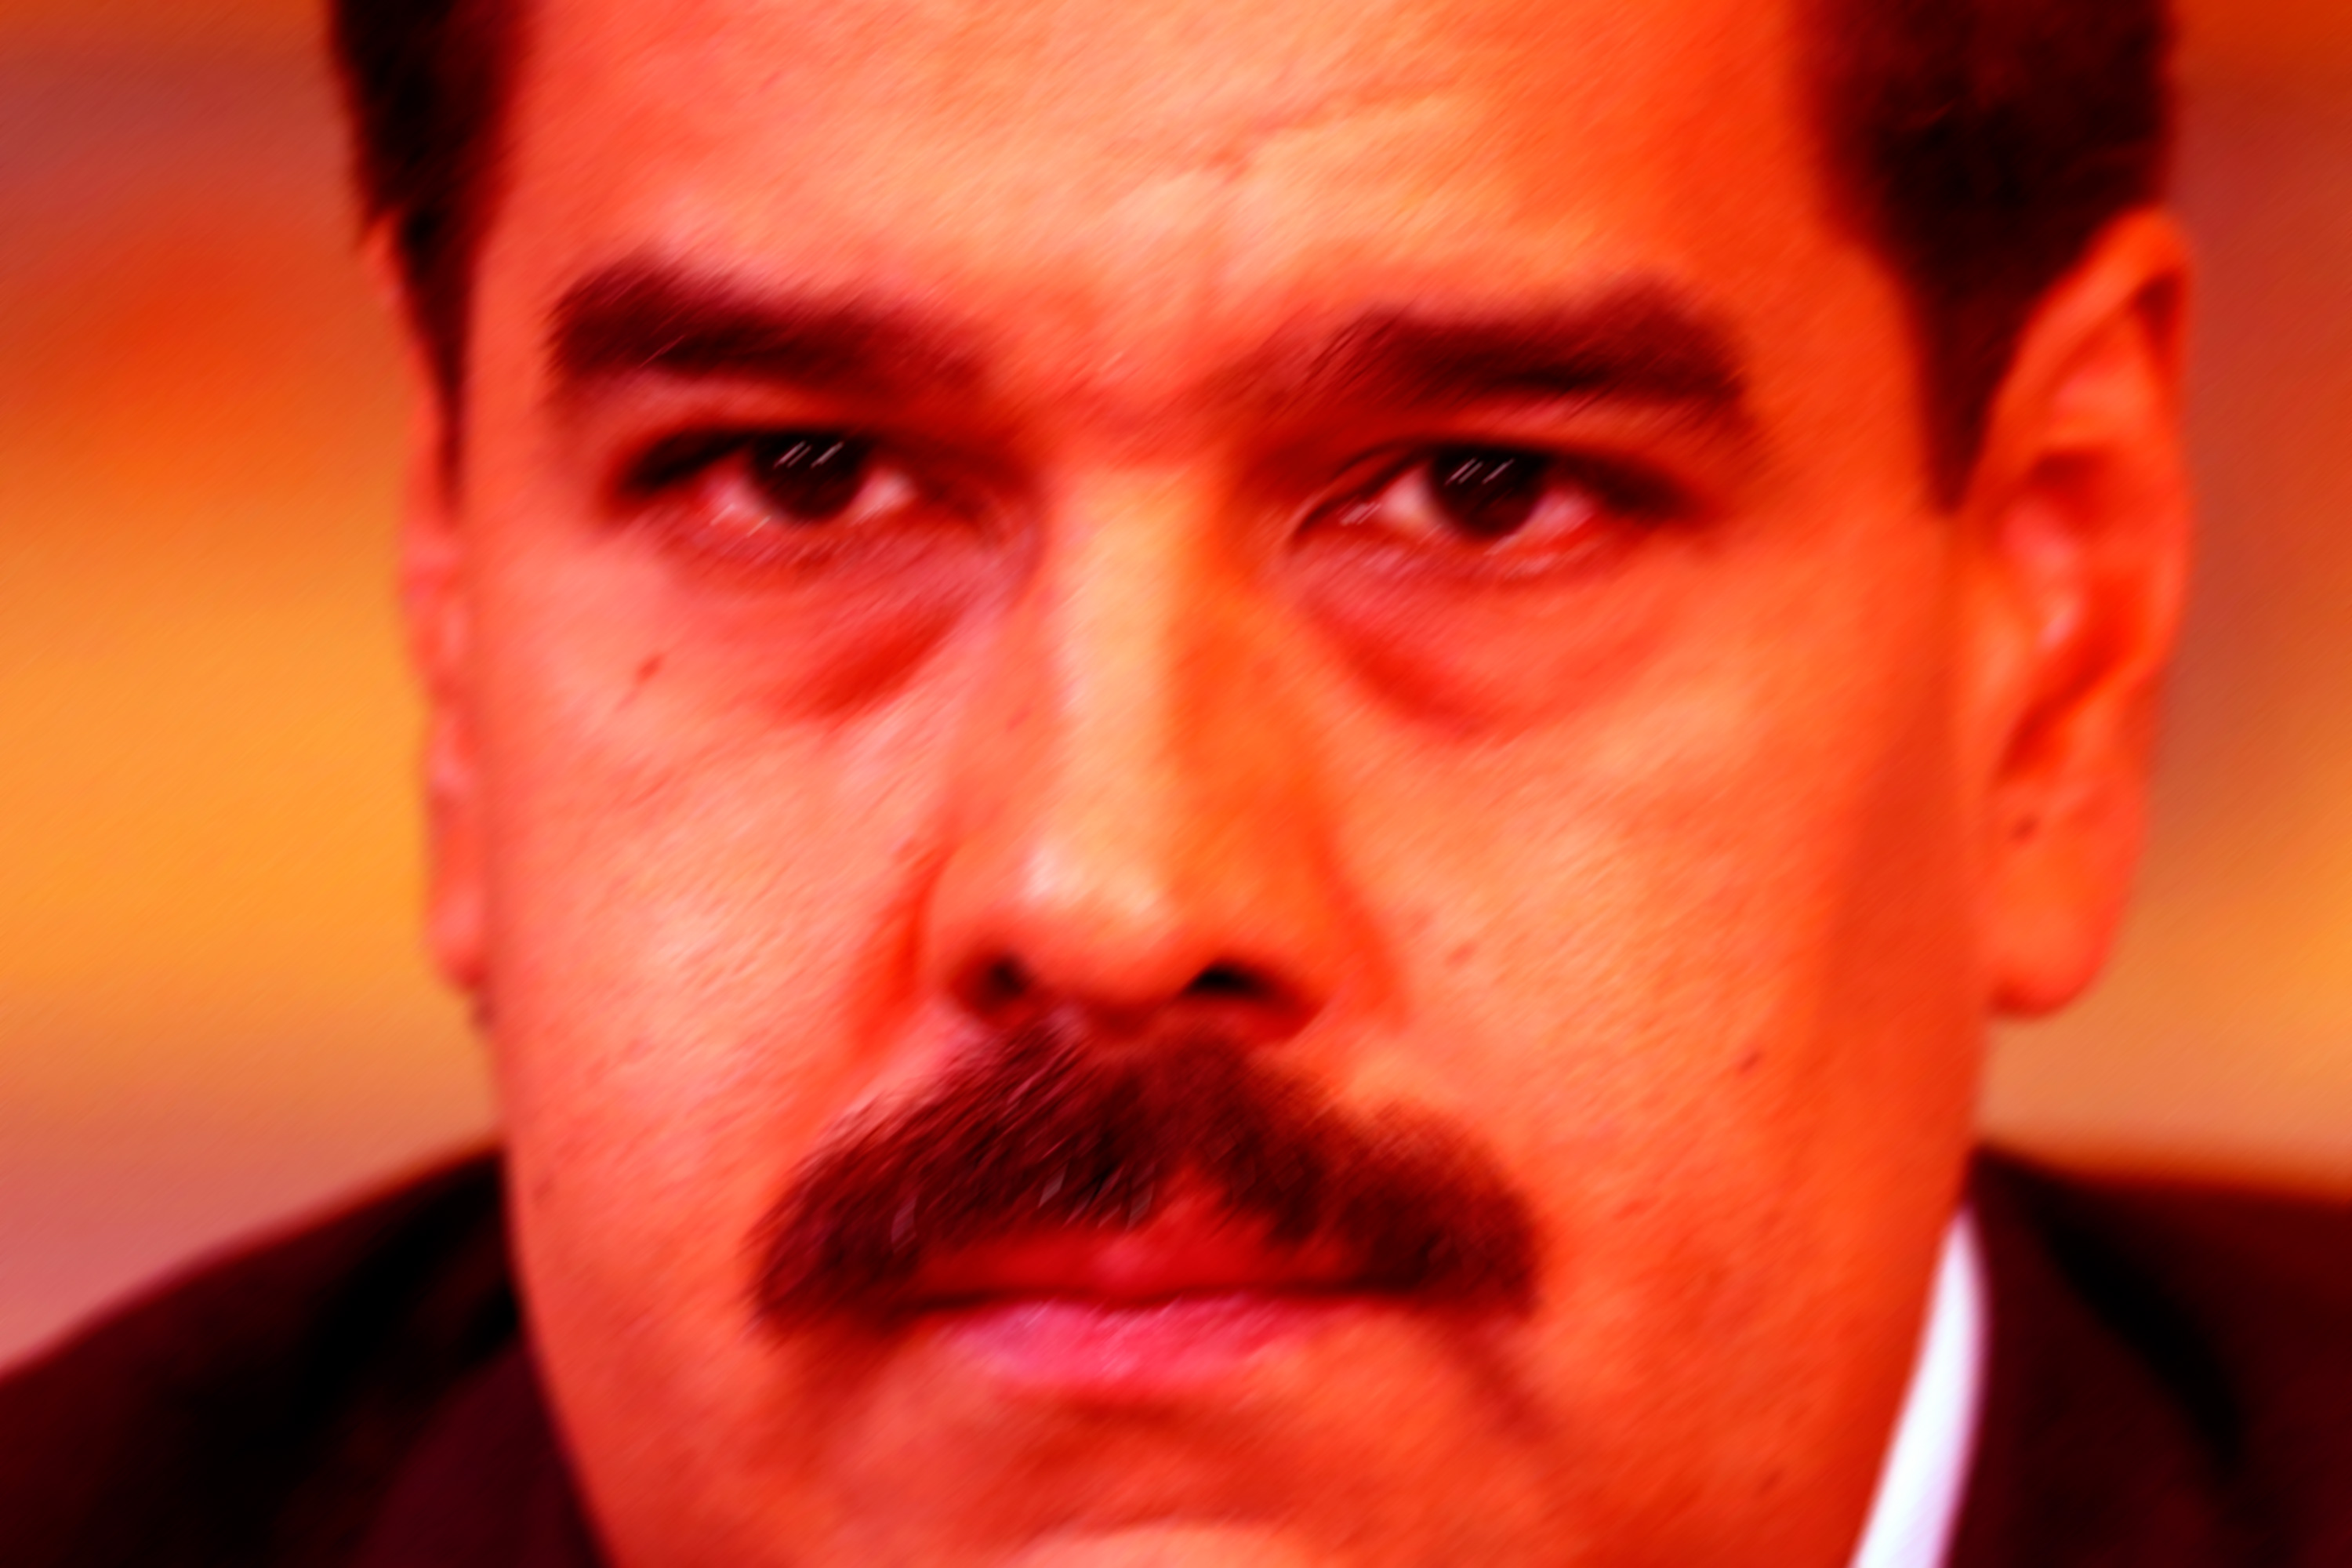 Solo 4.1 % de venezolanos reconocen a Maduro como presidente: Guaidó se alza con 84.6 % de apoyo popular (Flash Meganálisis)